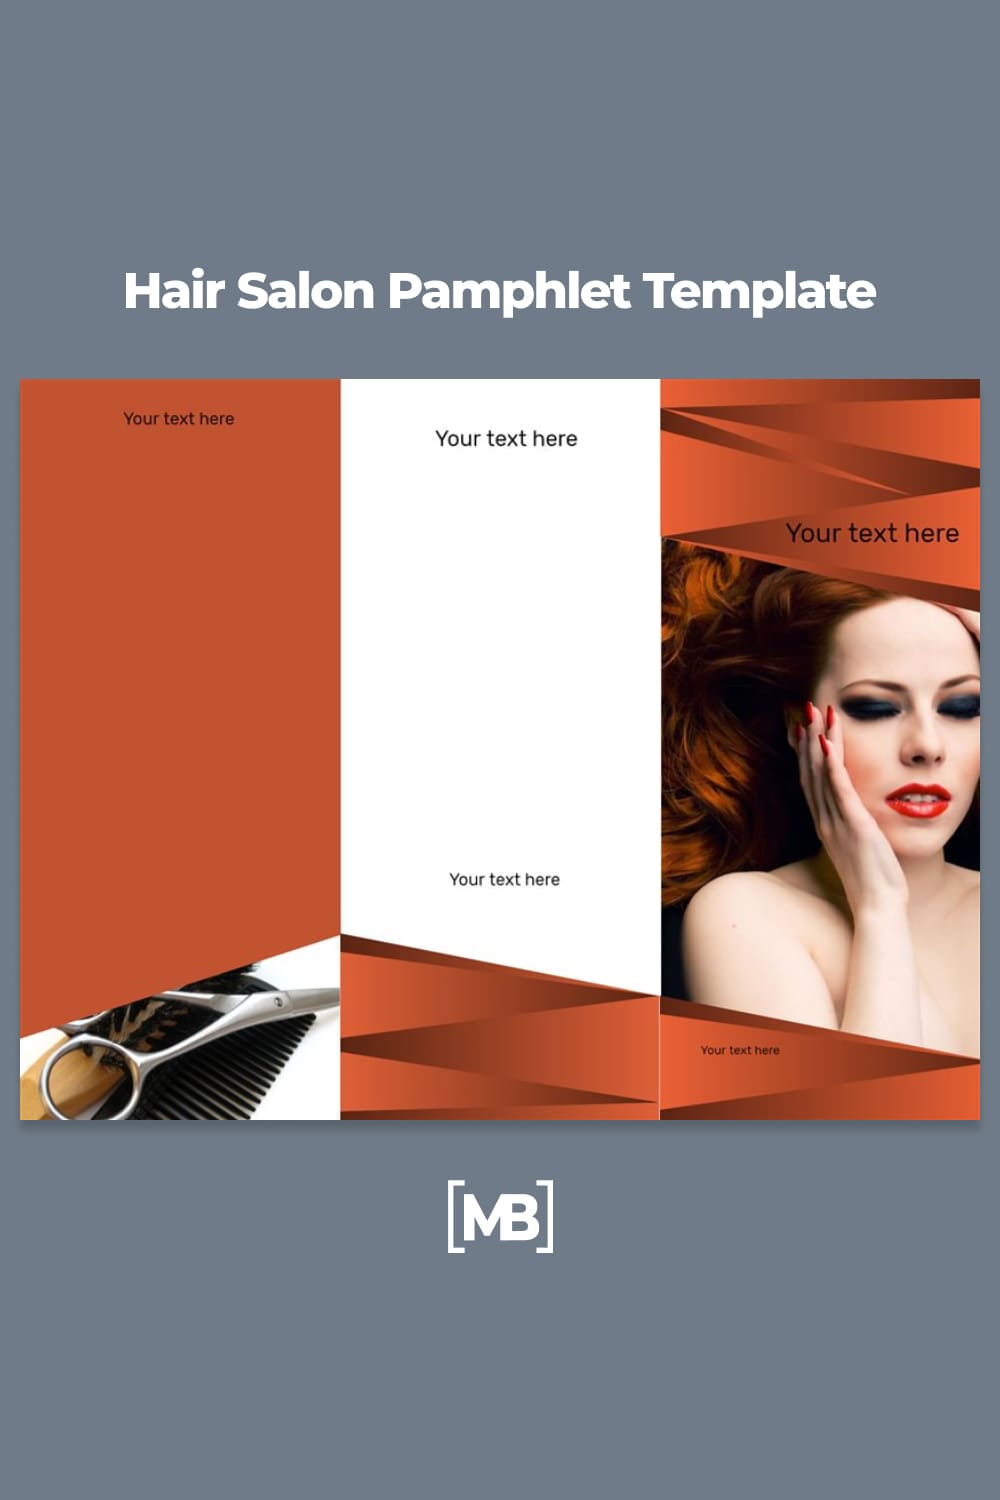 Hair salon pamphlet template.